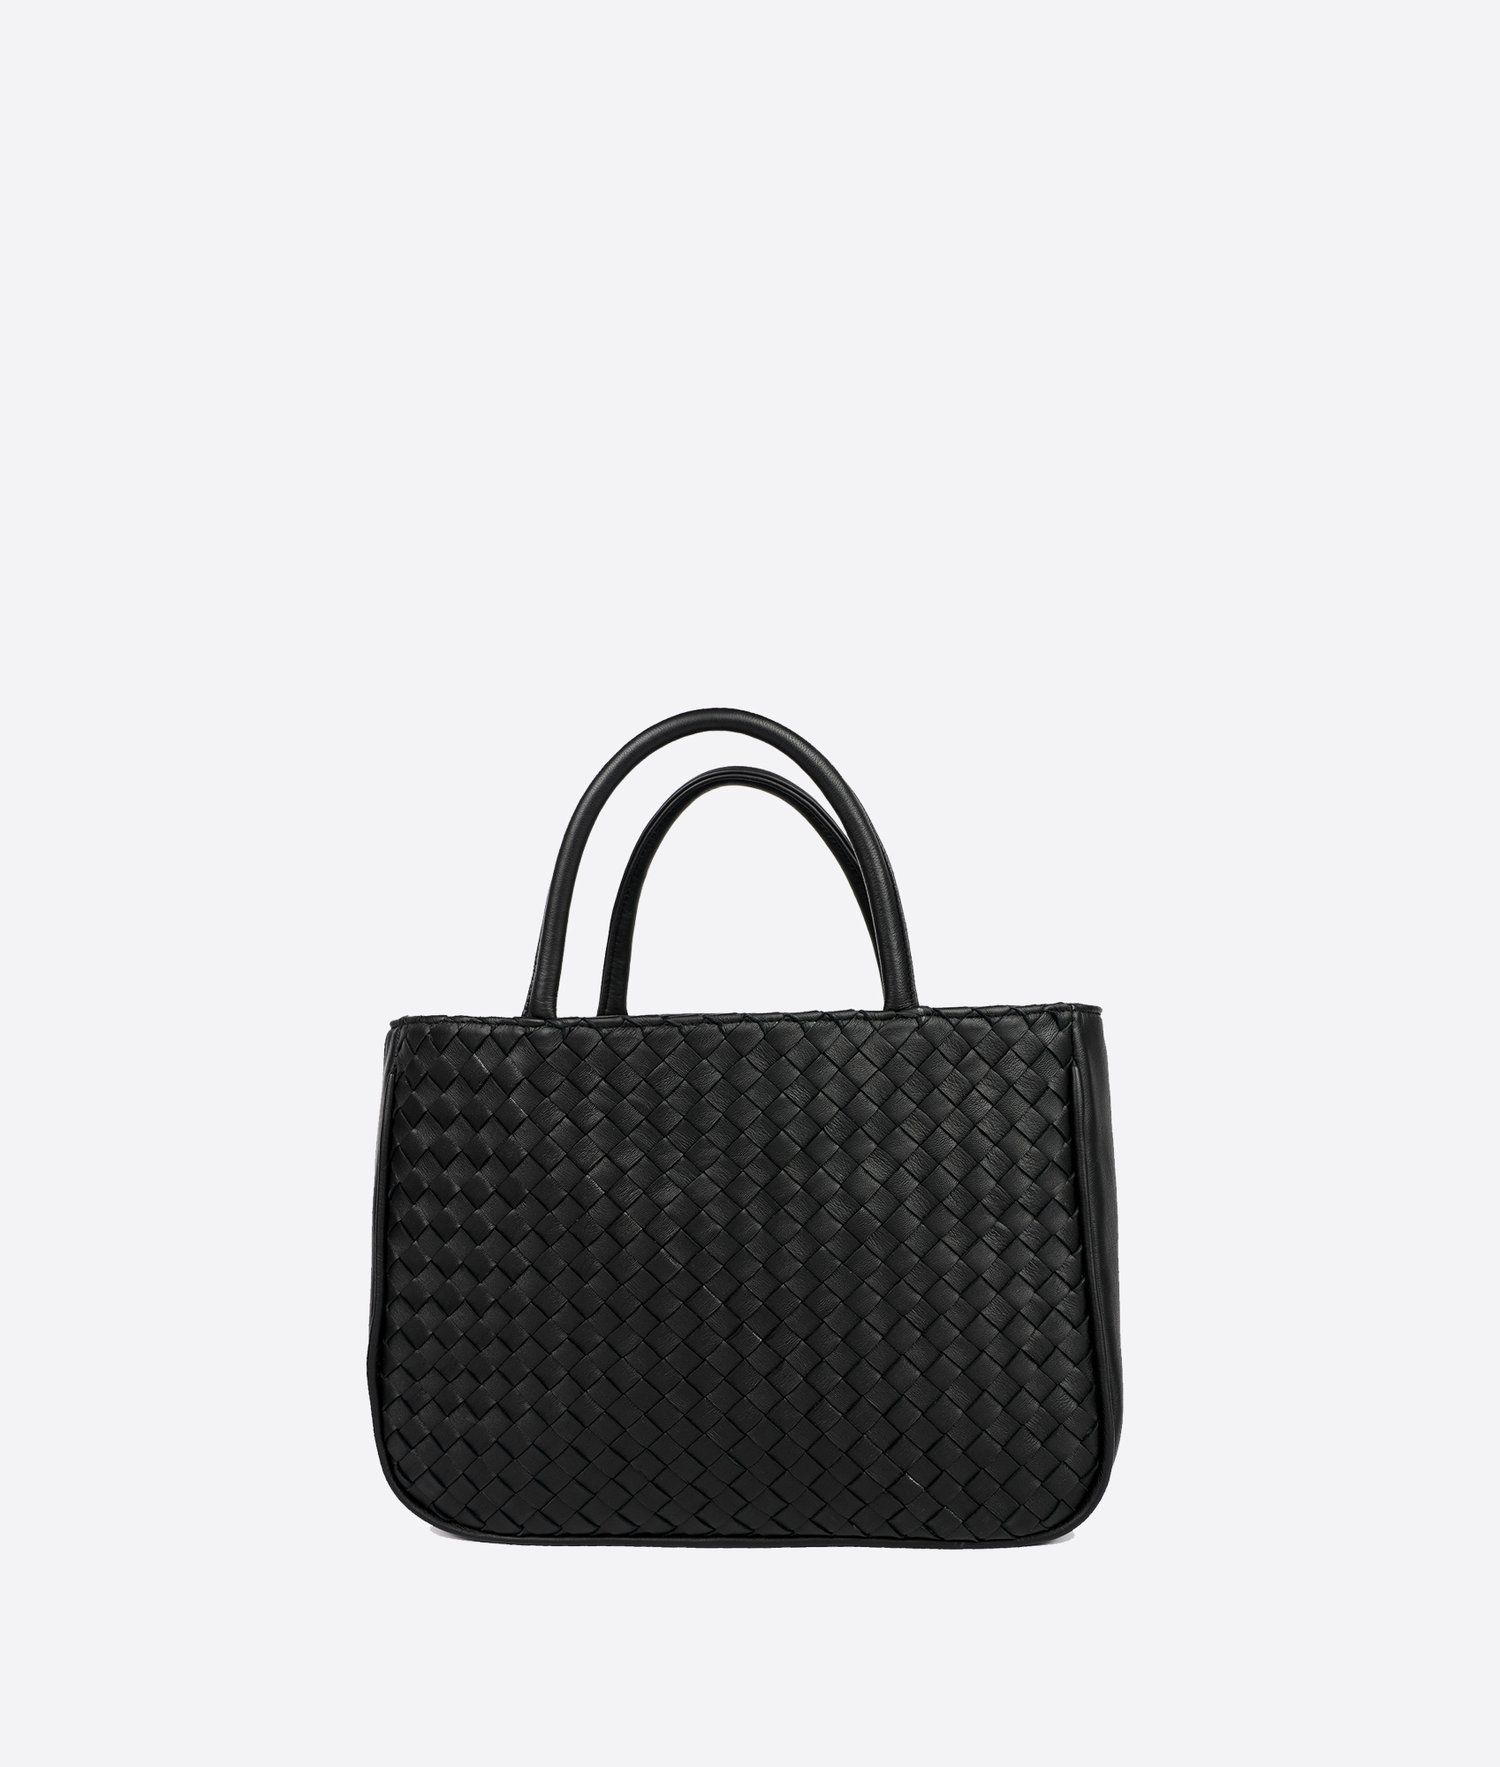 Hand-woven leather mini tote bag in black — Kmana